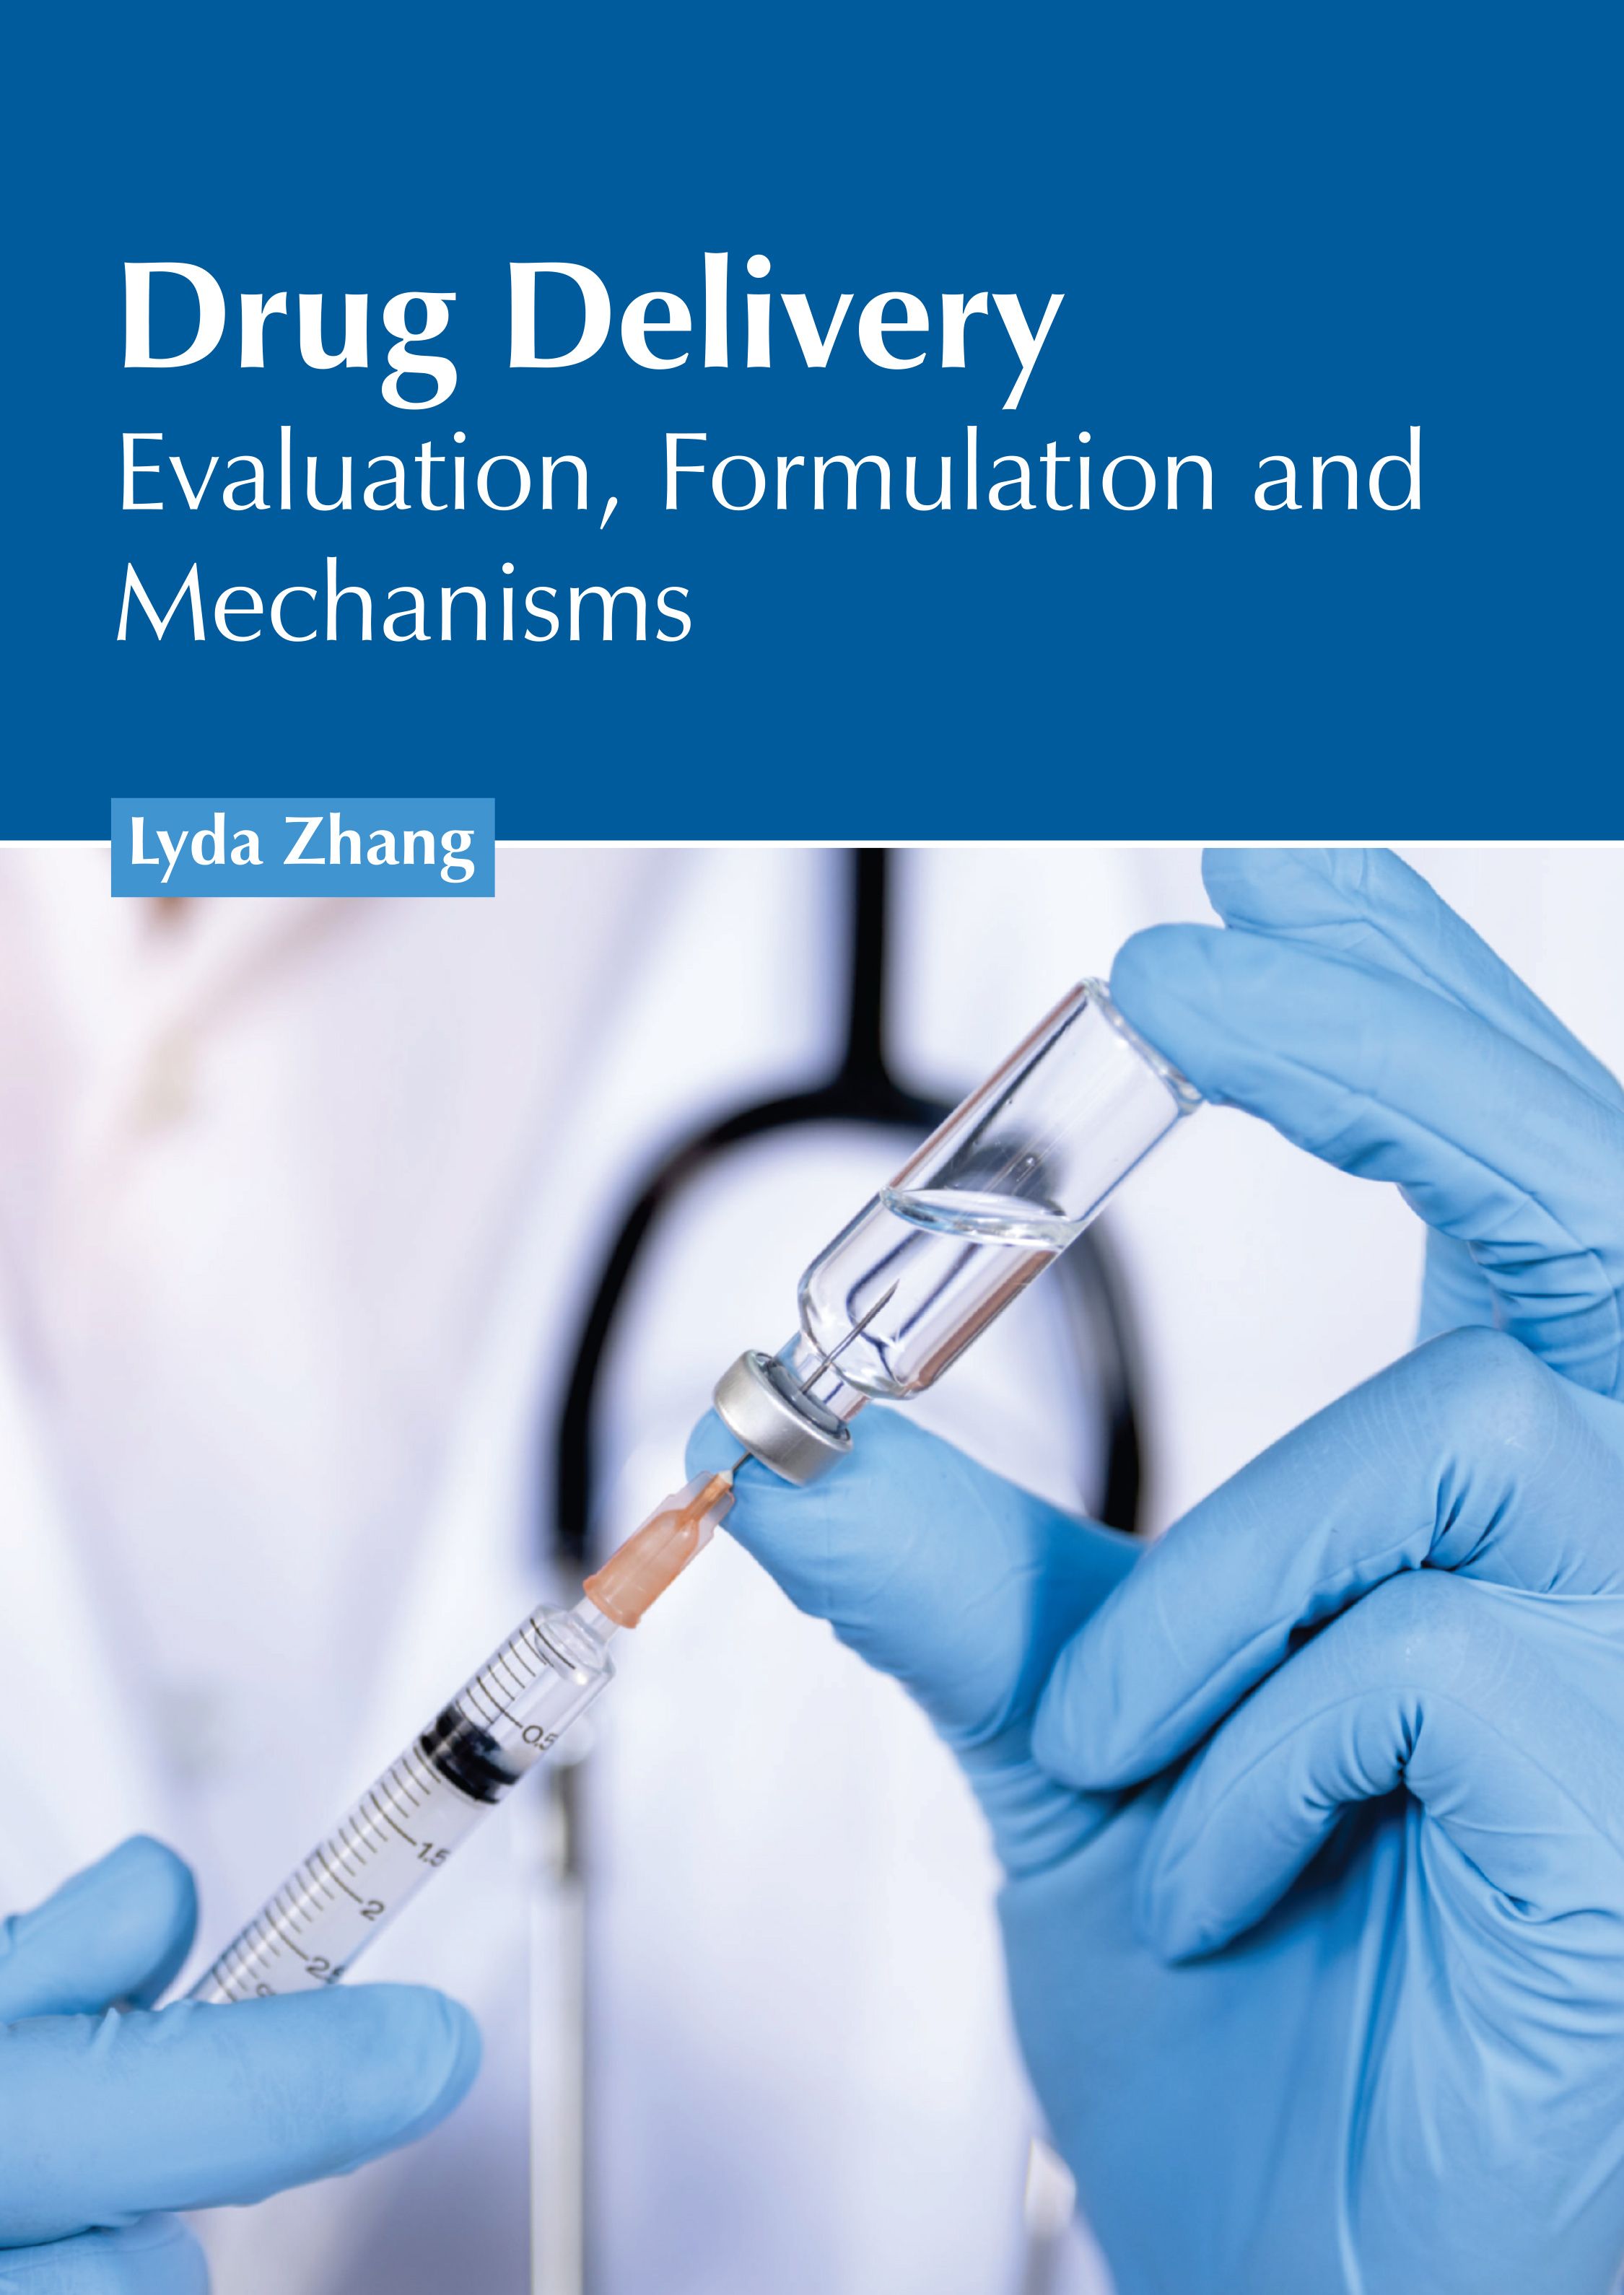 

exclusive-publishers/american-medical-publishers/drug-delivery-evaluation-formulation-and-mechanisms-9798887400716